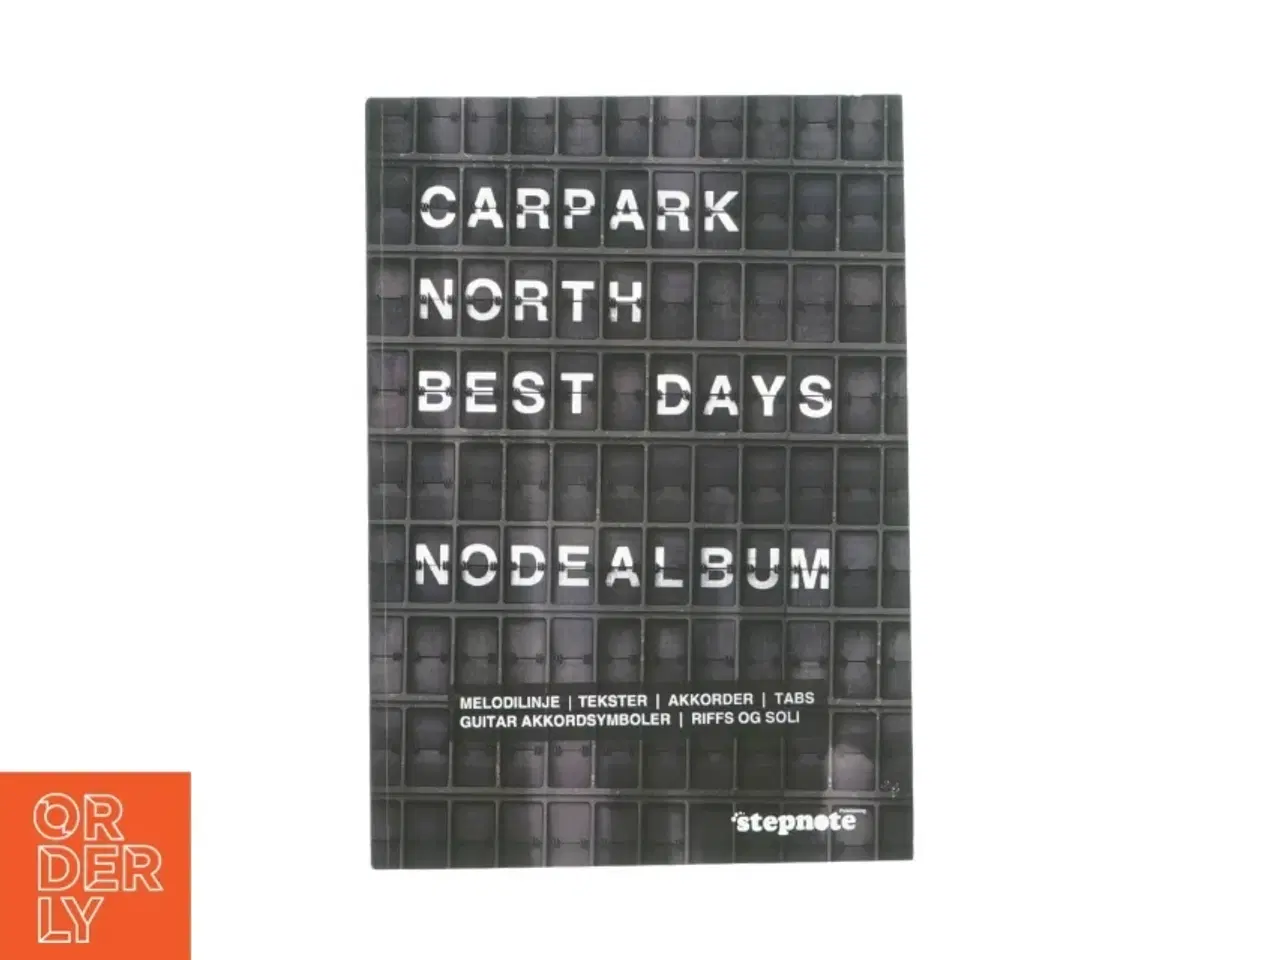 Billede 1 - Carpark North best days nodealbum